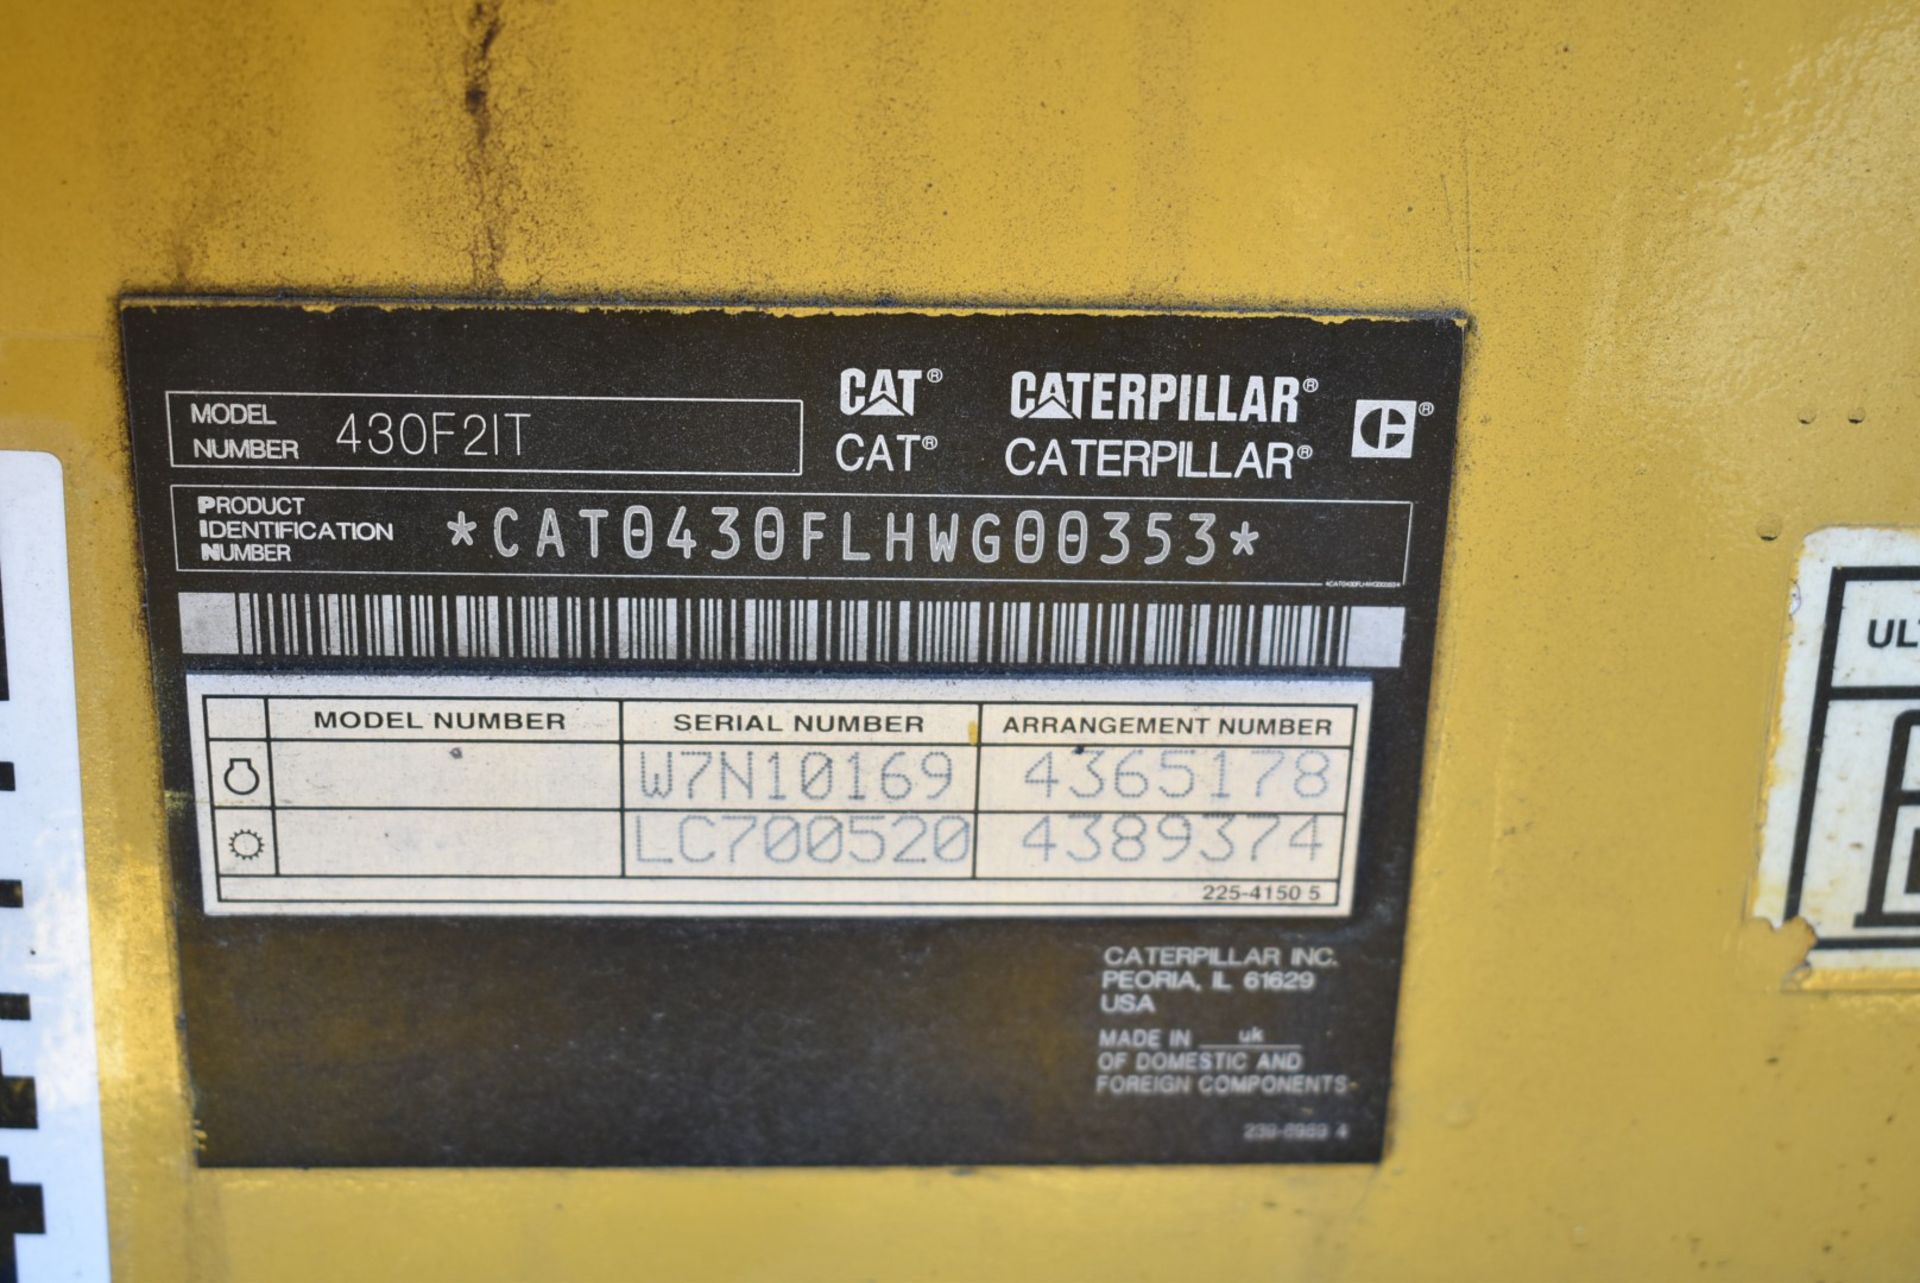 CATERPILLAR (2016) 430F2IT BACKHOE LOADER WITH CATERPILLAR C4.4B DIESEL ENGINE, 92" LOADER BUCKET, - Image 2 of 2